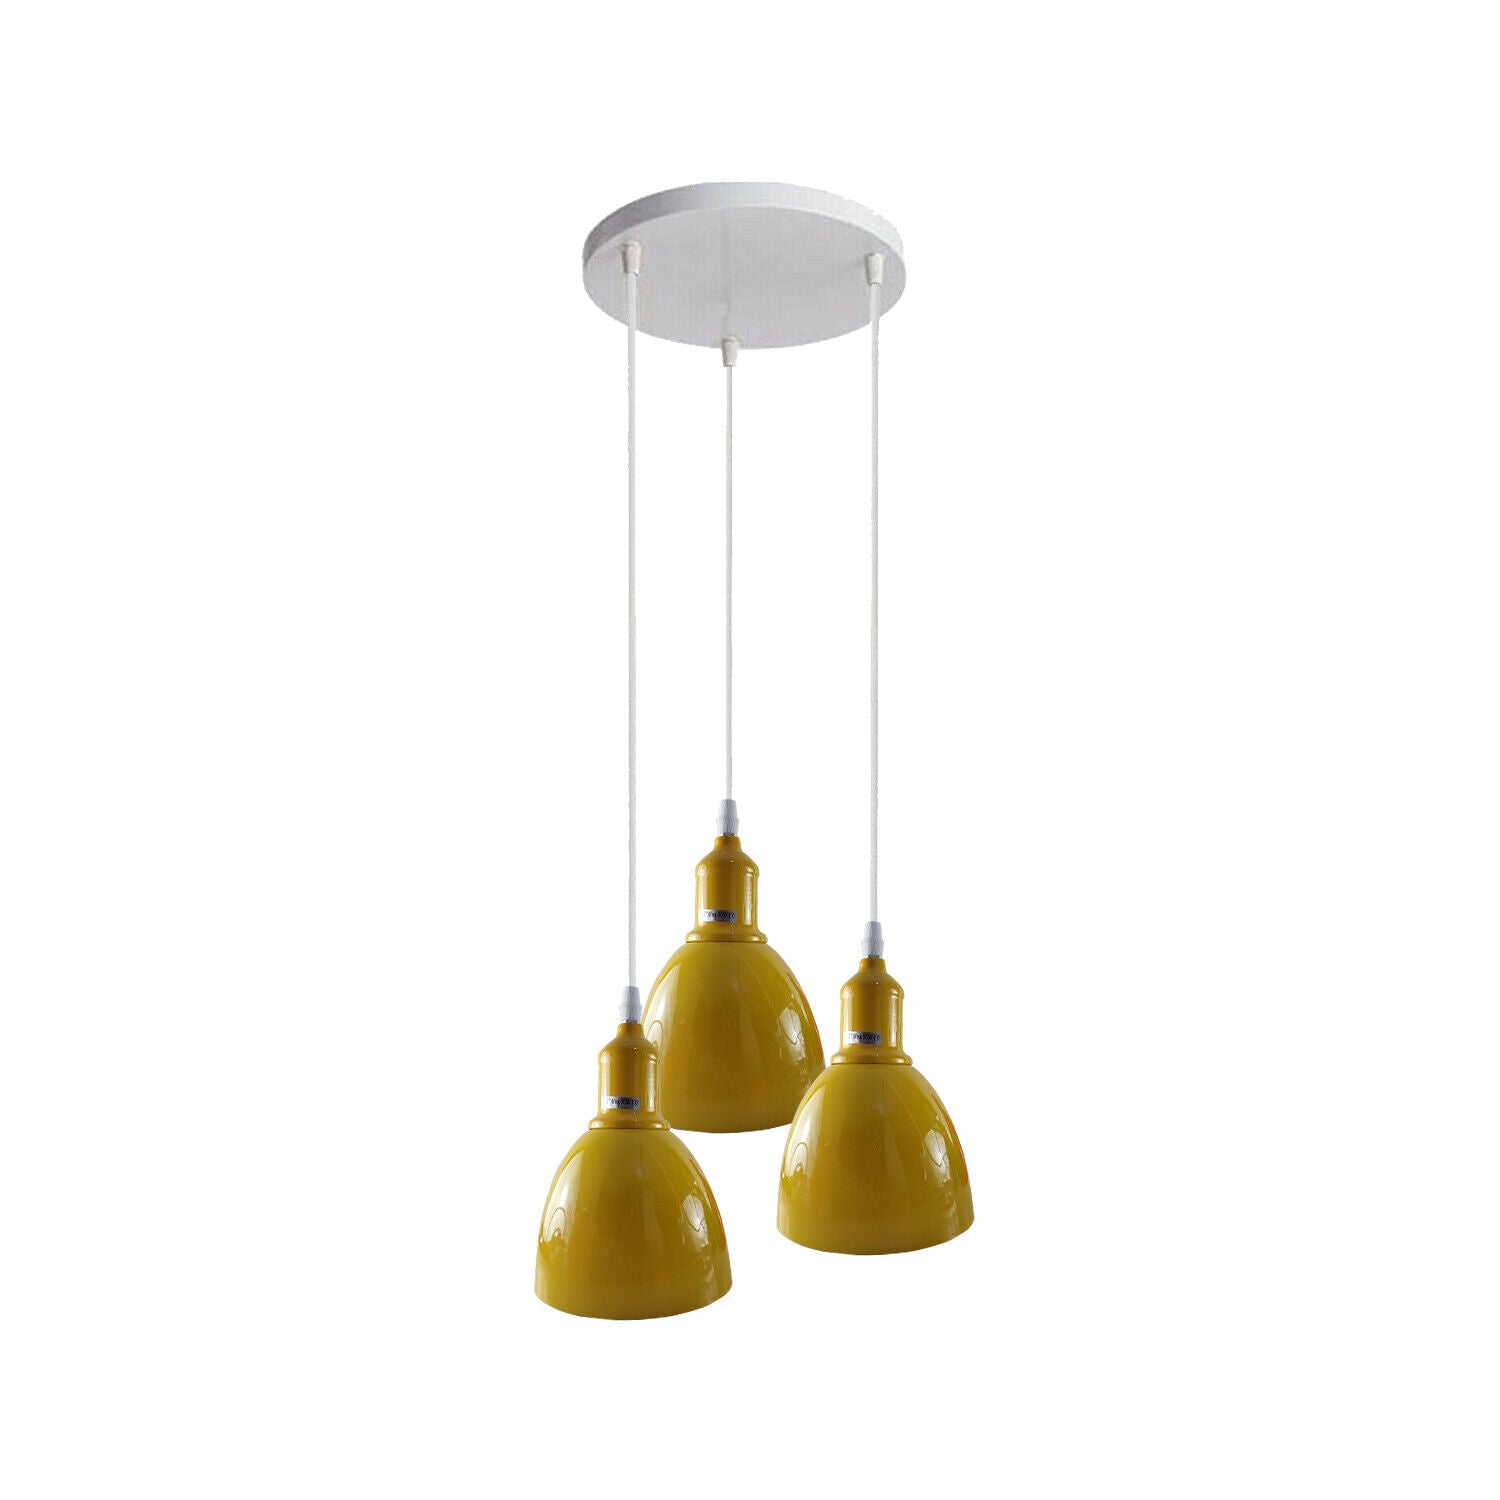 Stylish 3-light pendant lamp in yellow 